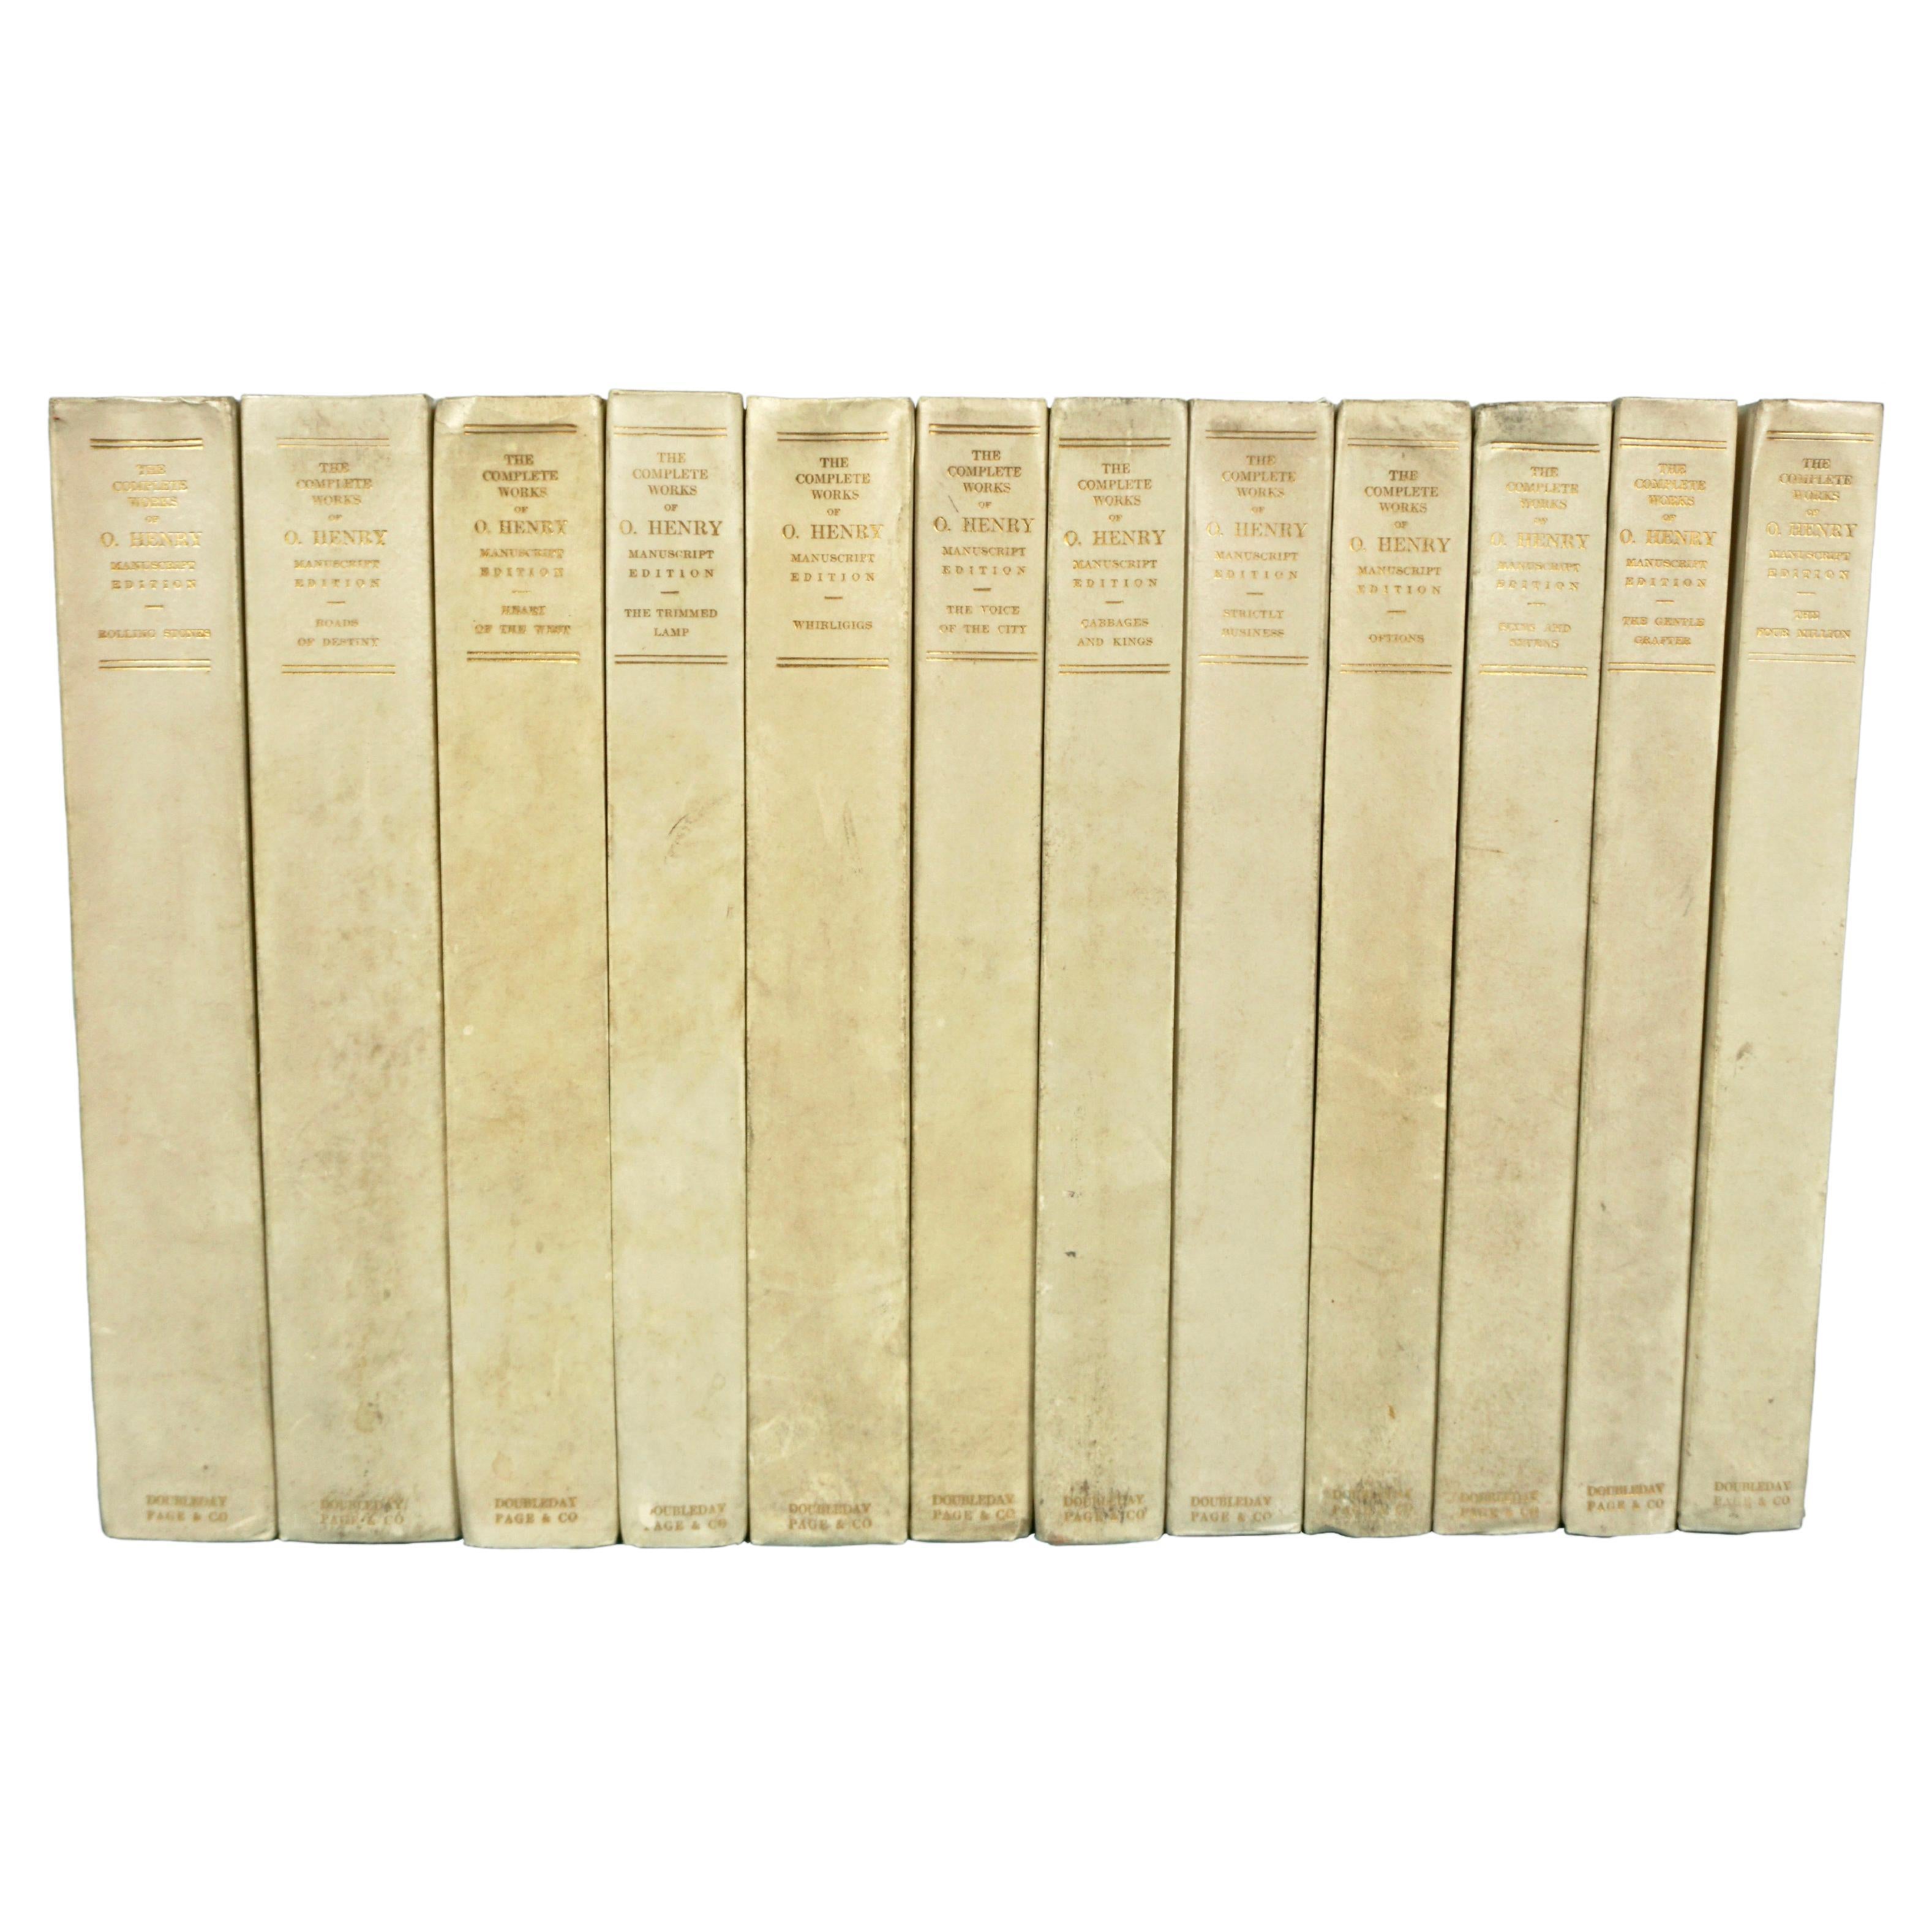 The Complete Works of O. Henry, édition manuscrite limitée à 125 exemplaires